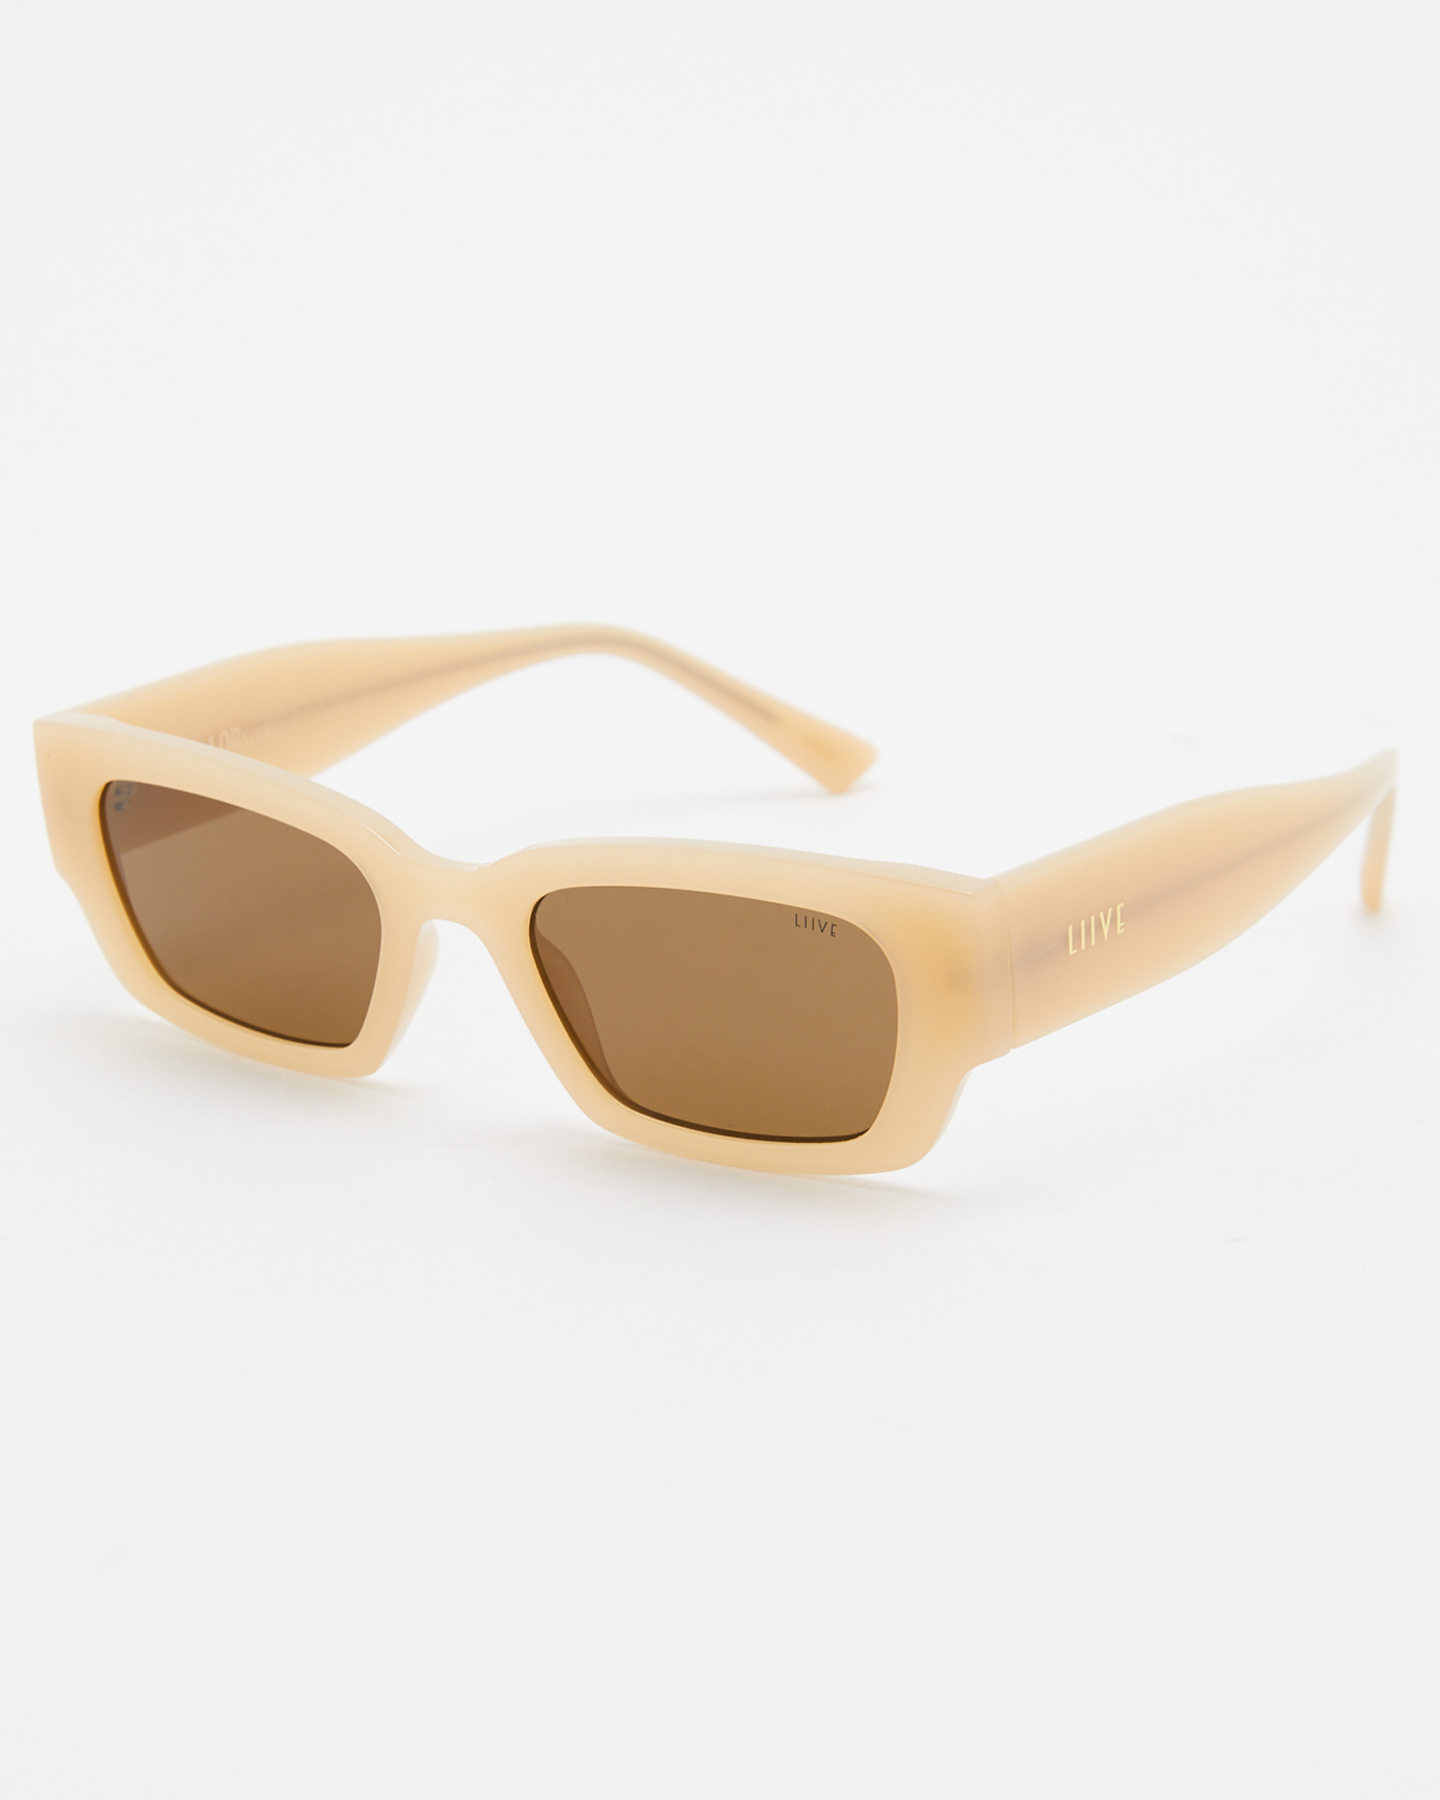 Liive Vision Lobster Sunglasses - Bone | SurfStitch